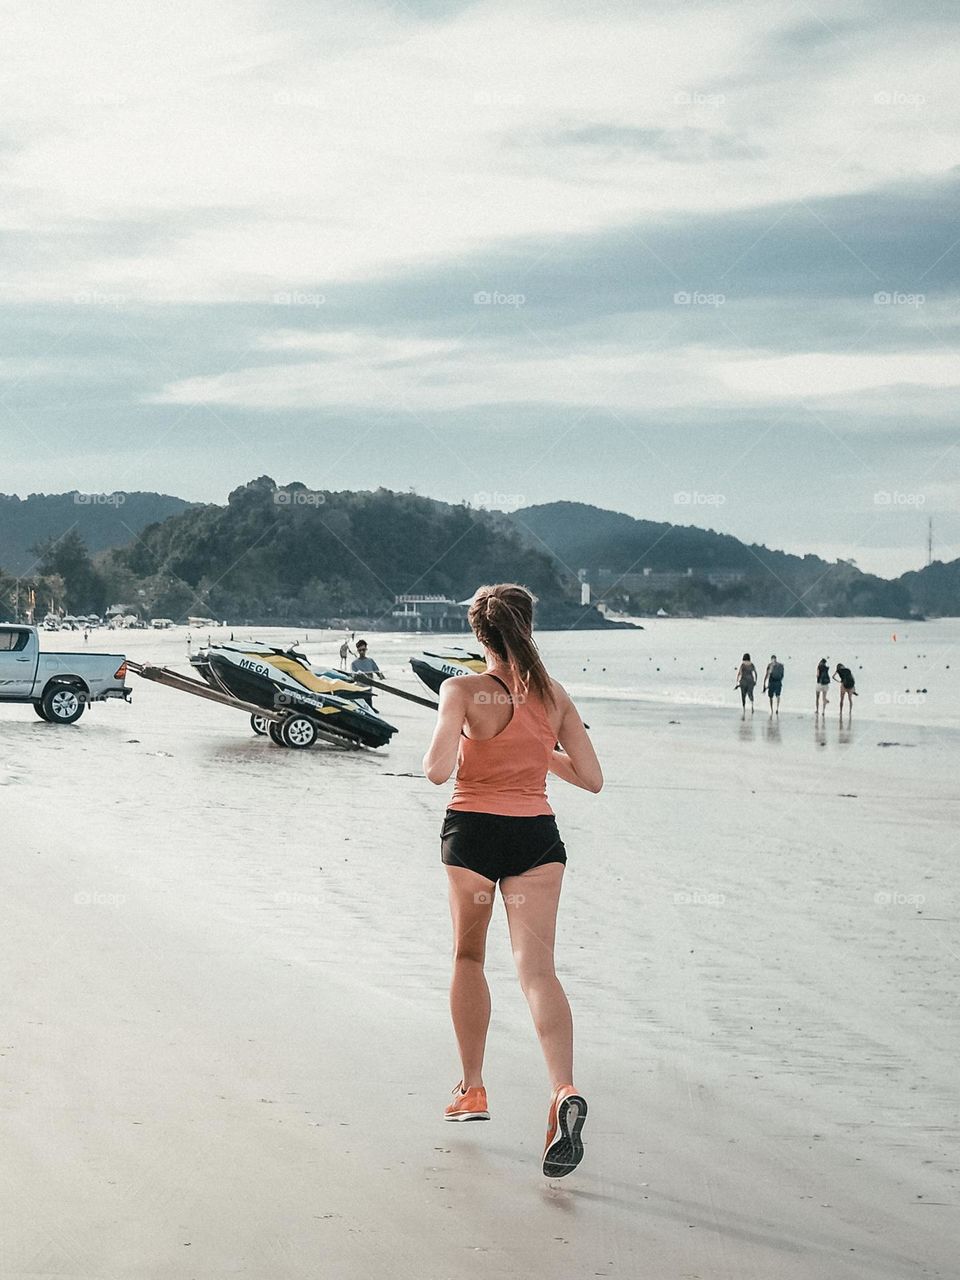 A lady doing her routine beach run